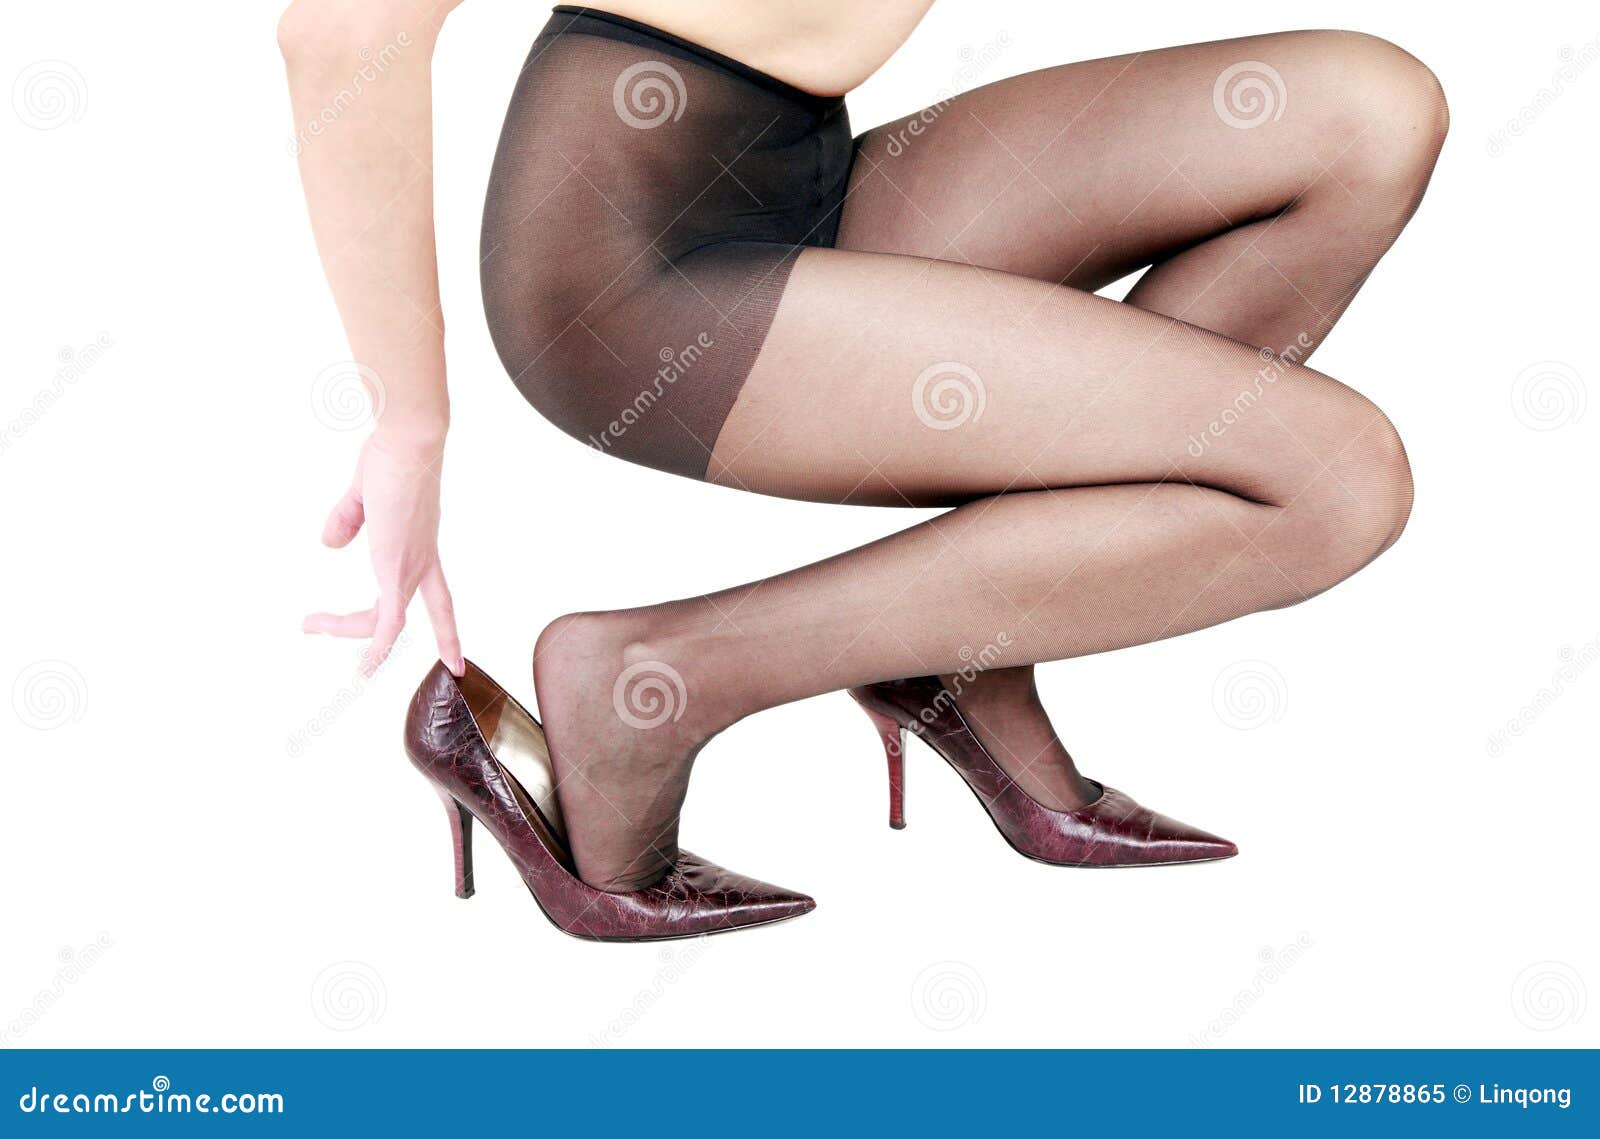 4,708 Women Stockings Stock Photos picture